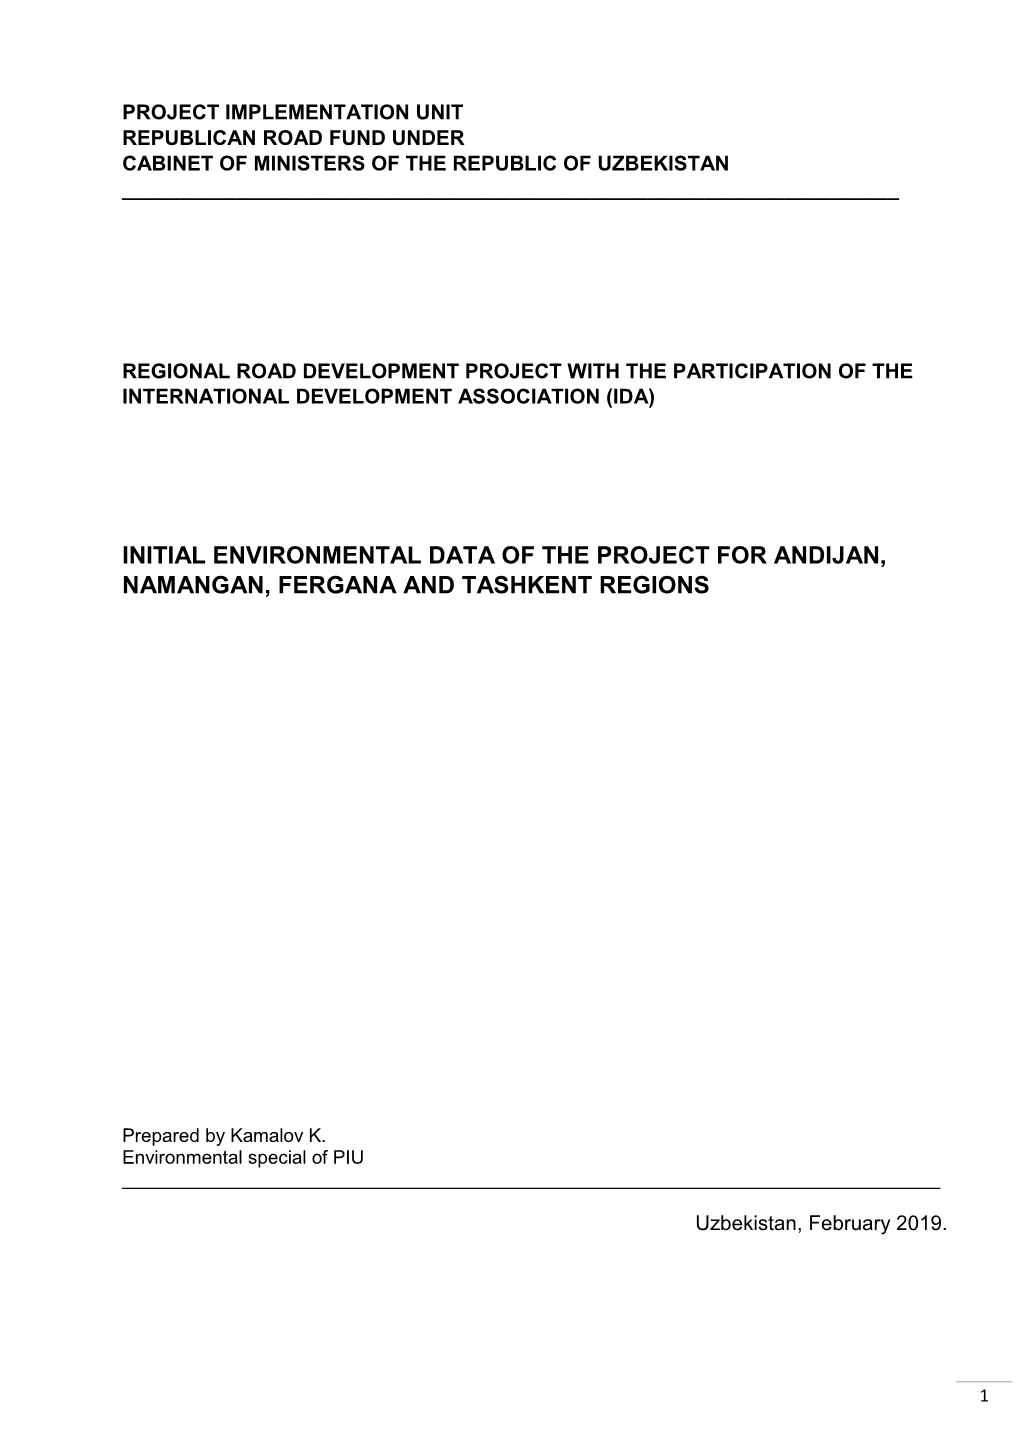 Initial Environmental Data of the Project for Andijan, Namangan, Fergana and Tashkent Regions